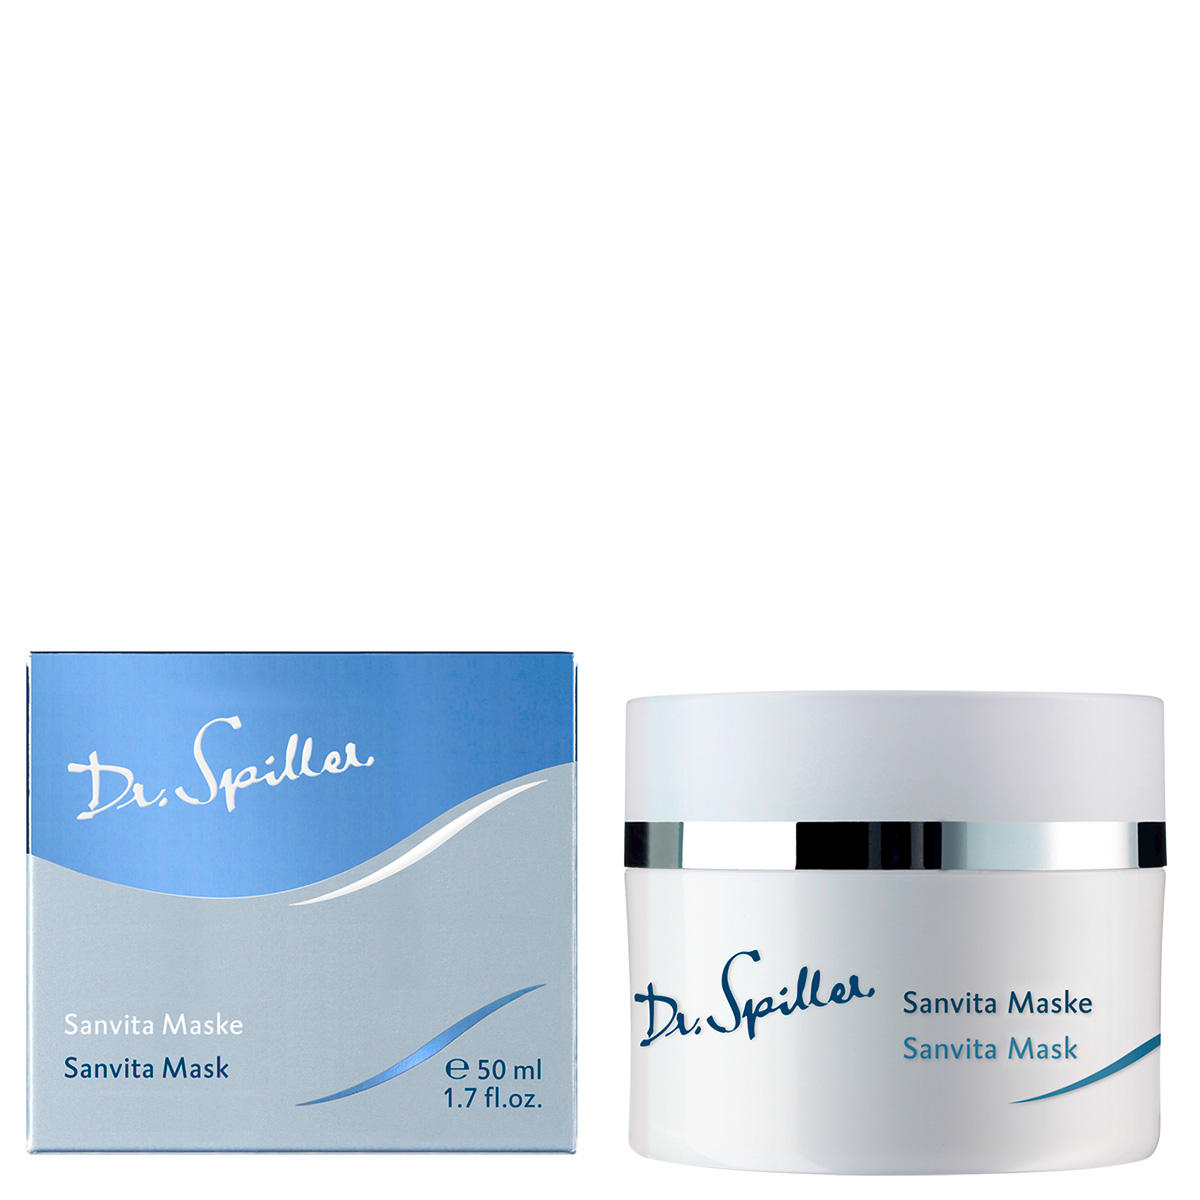 Dr. Spiller Biomimetic SkinCare Sanvita Maske 50 ml - 2